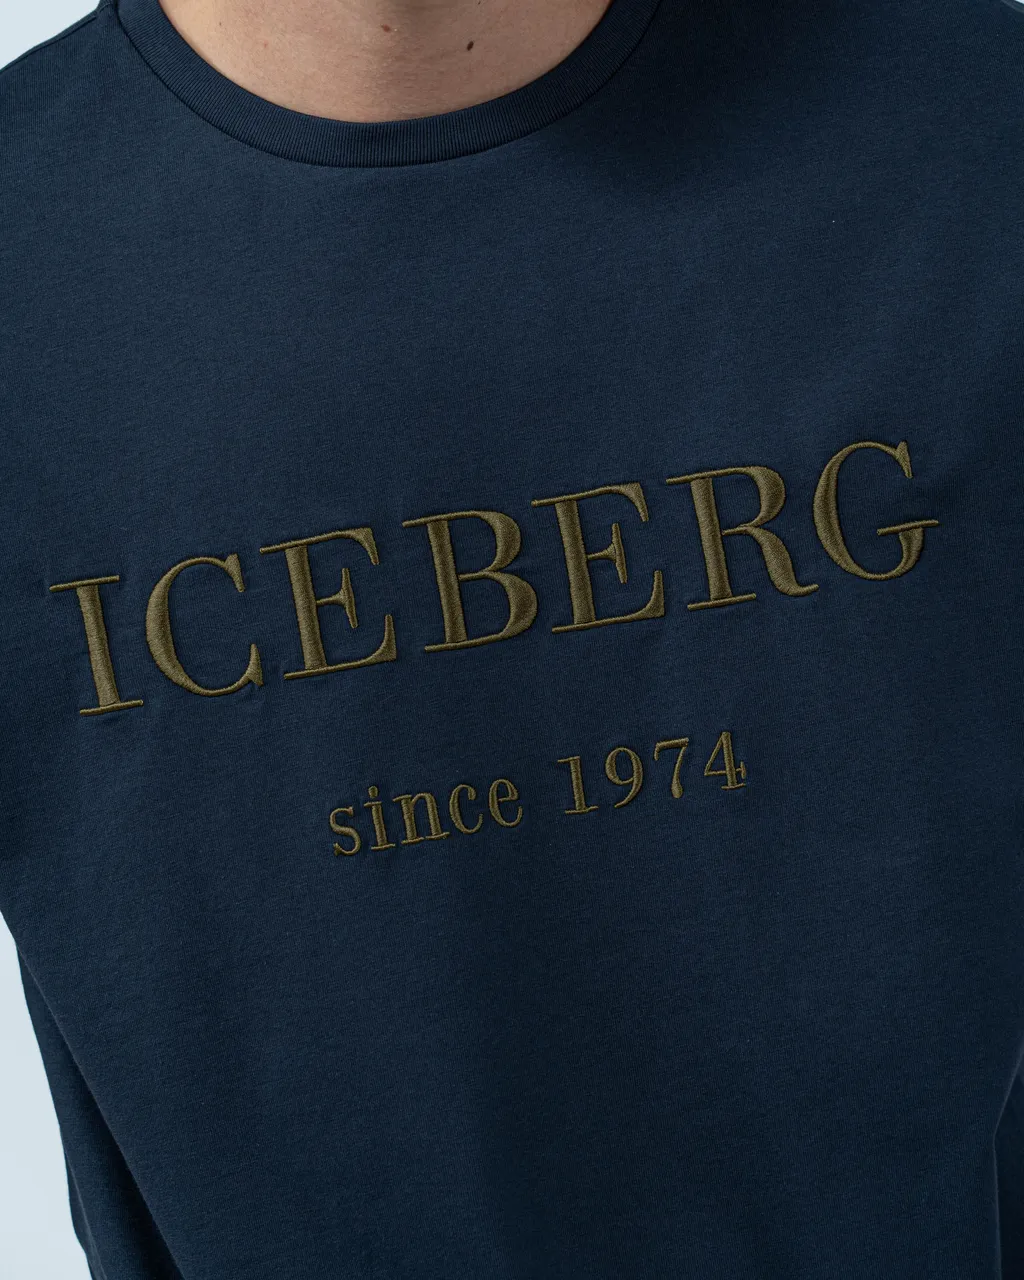 Iceberg T-hirt